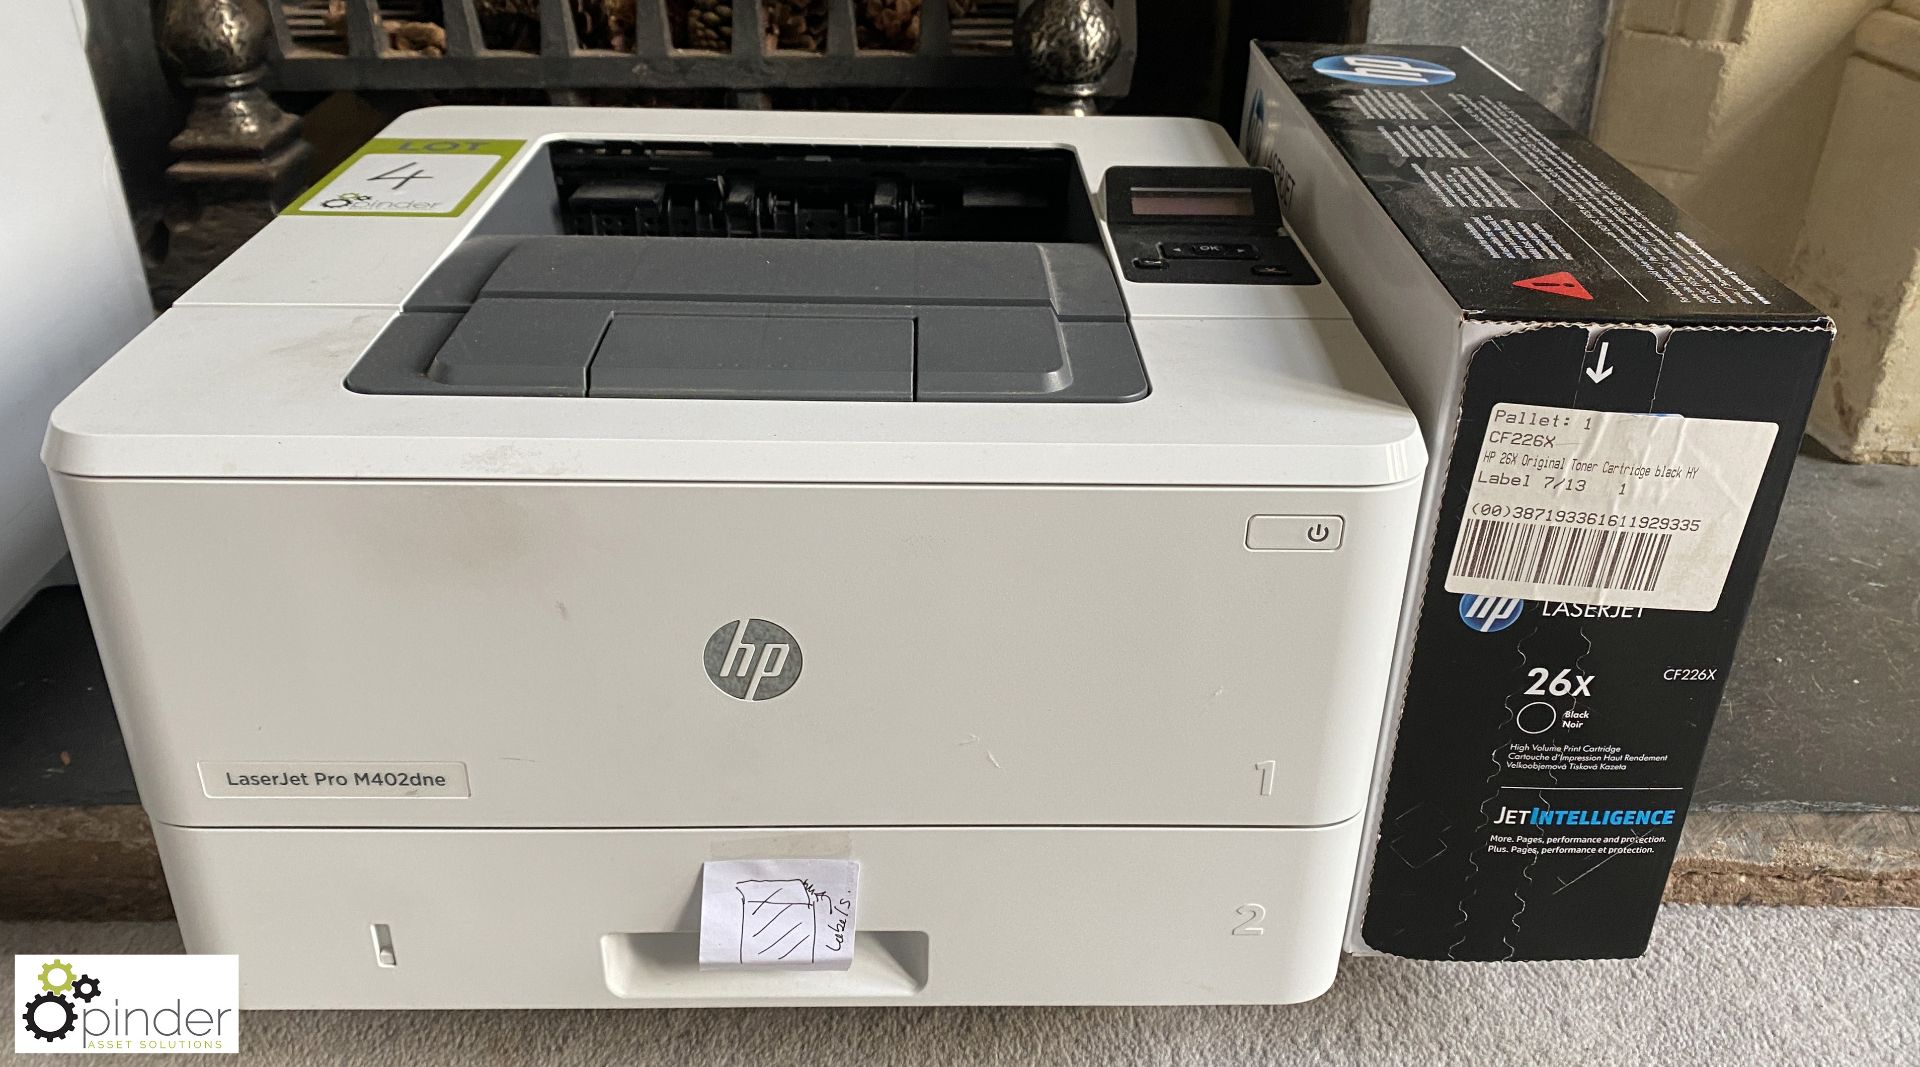 HP Laserjet M402 dne Laser Printer, with CF226X print cartridge, black, boxed and unused (